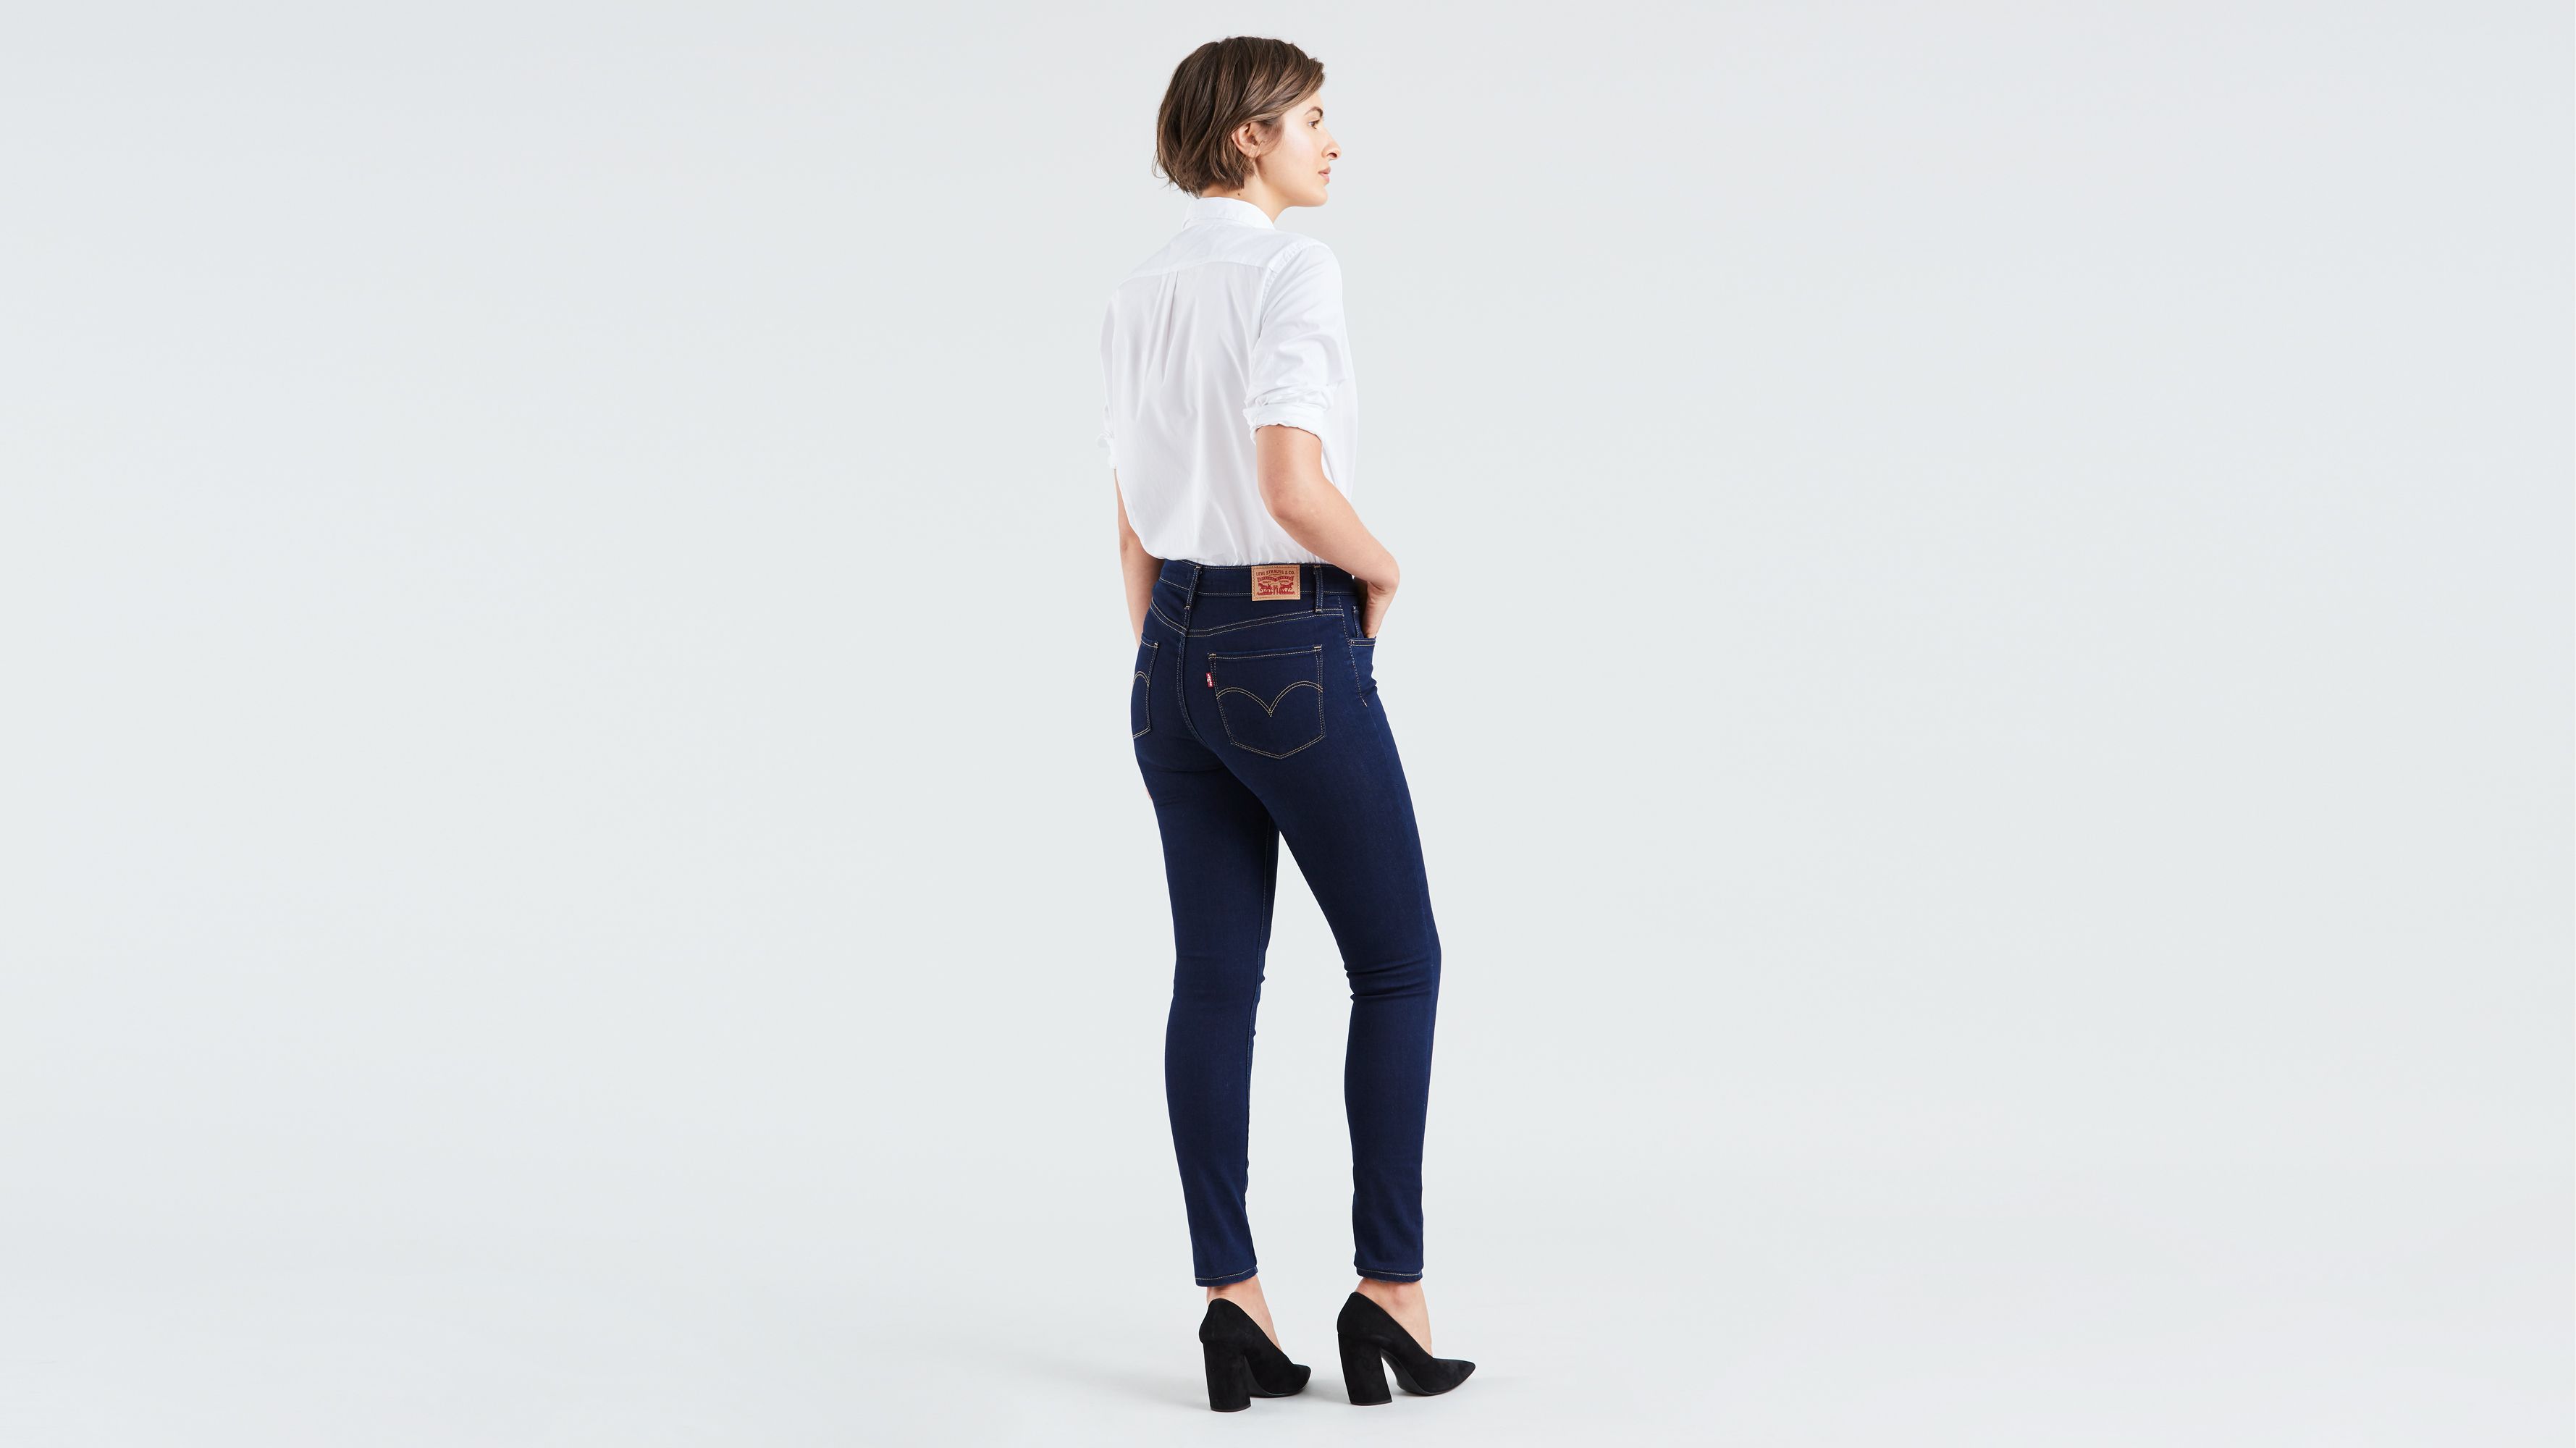 721 High Rise Skinny Women's Jeans 